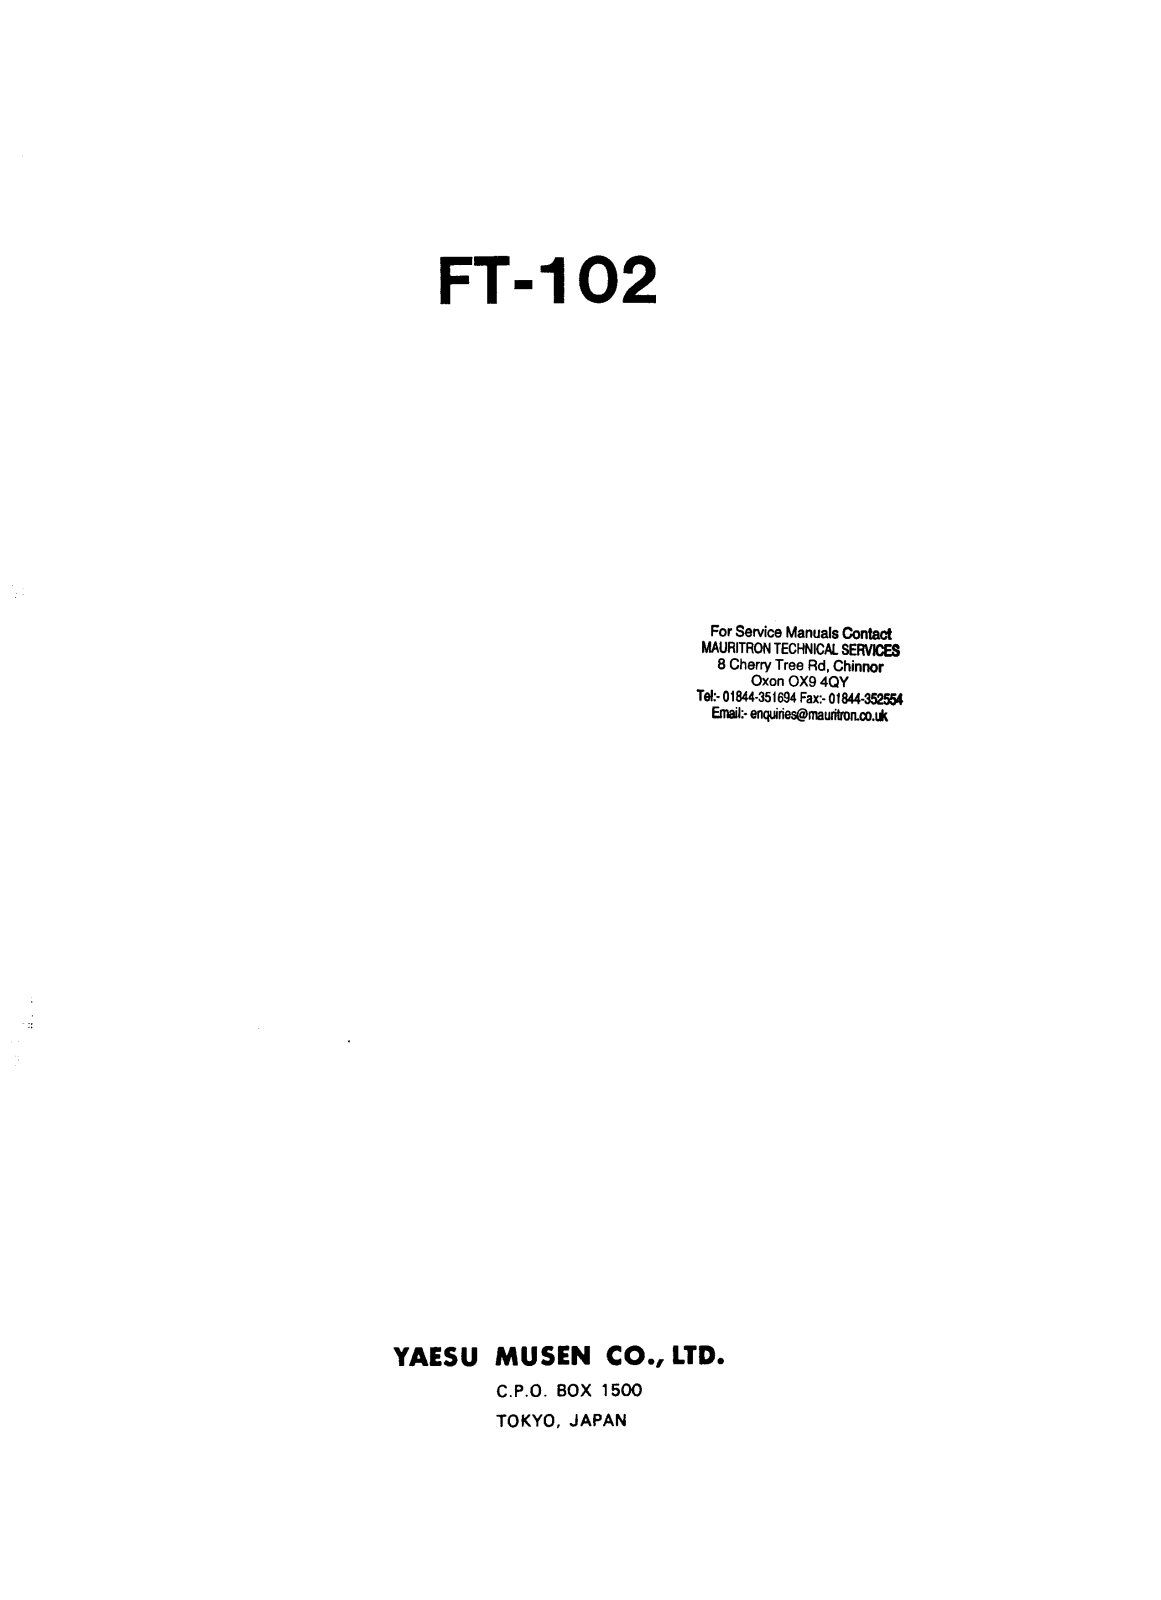 Yaesu ft 102 schematic